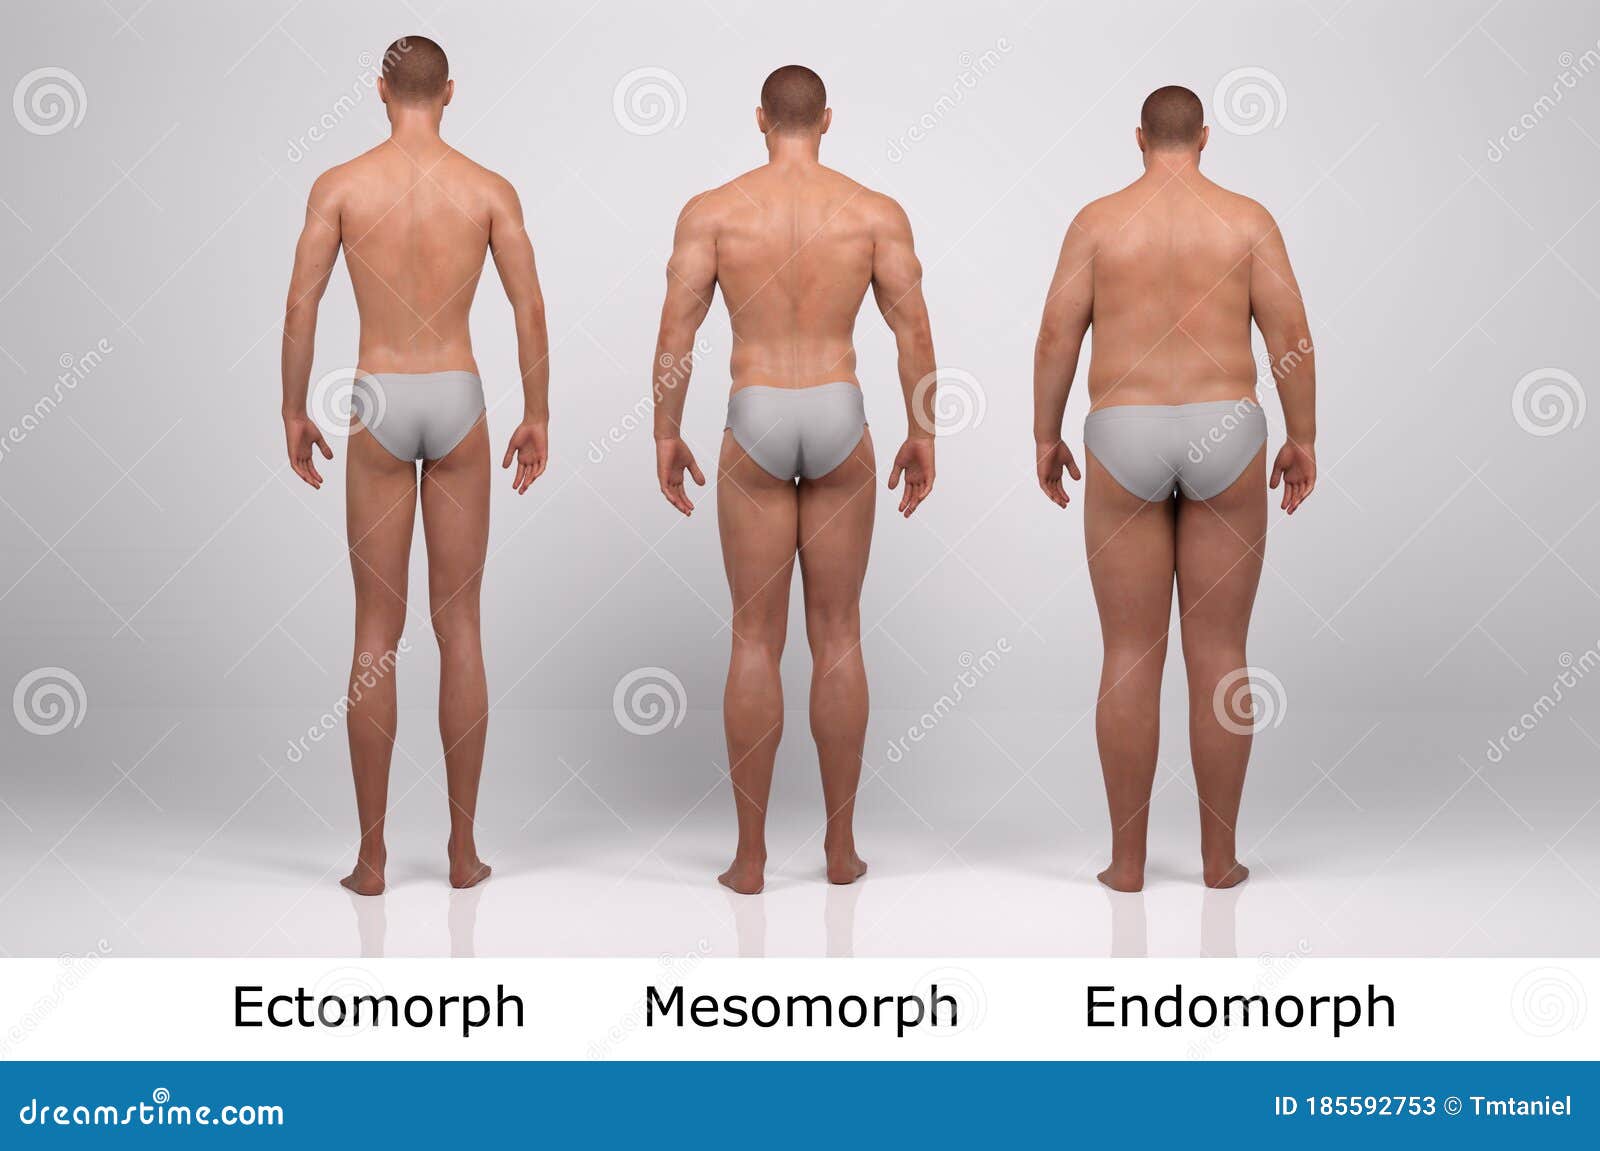 Male Body Types (Ectomorphs, Mesomorphs, and Endomorphs